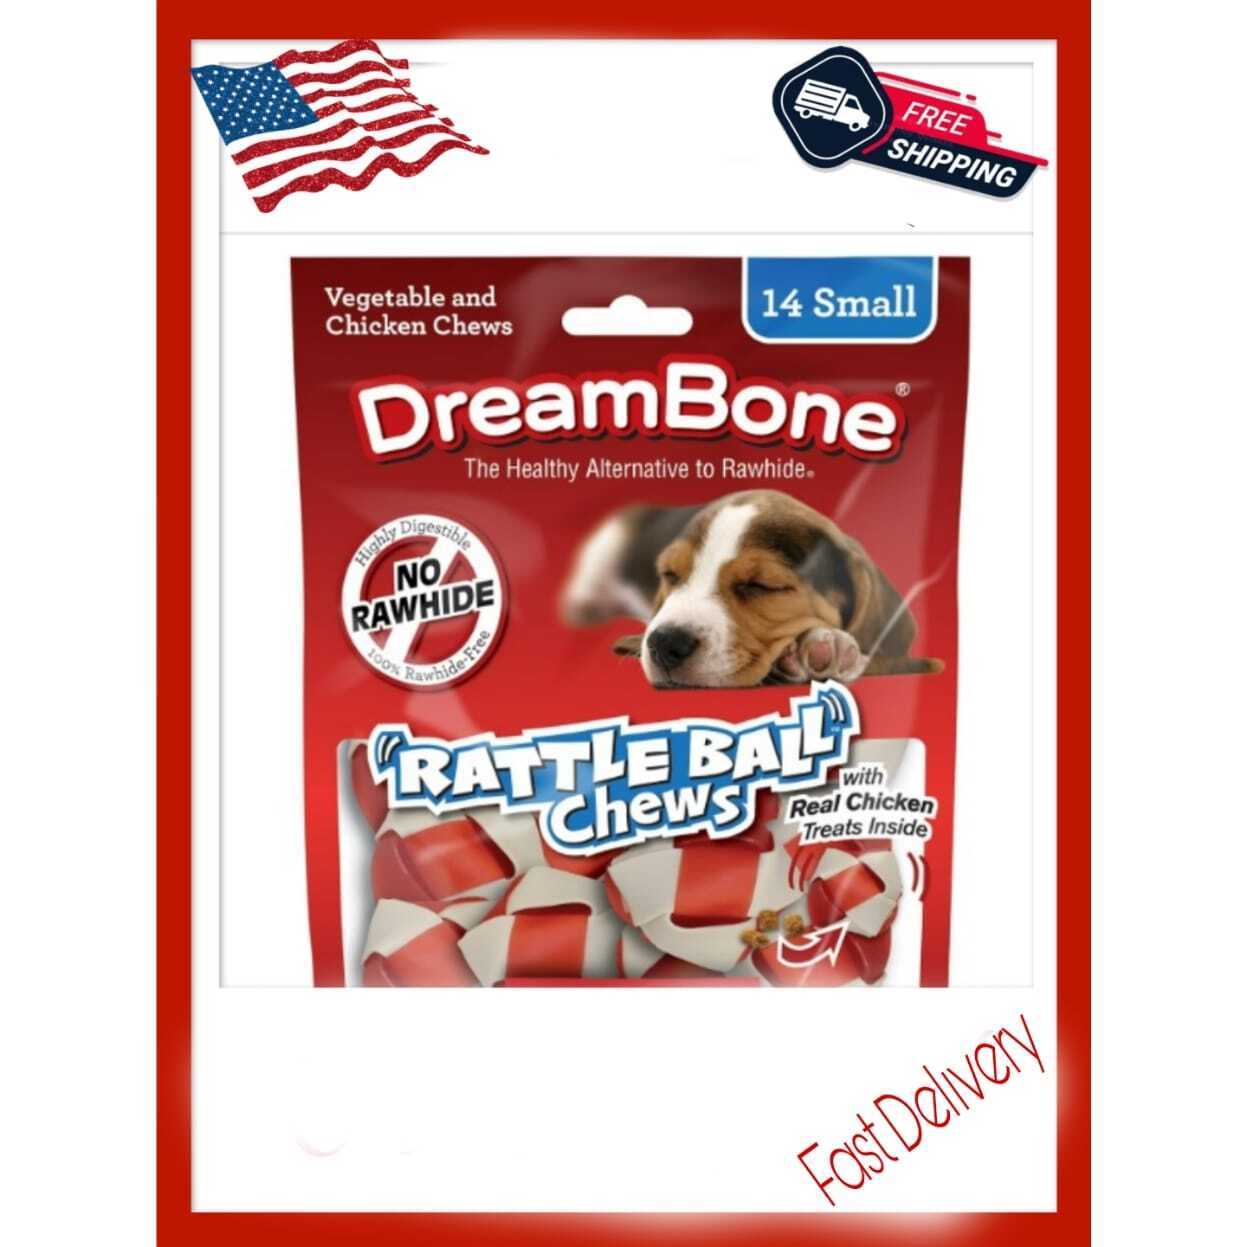 DreamBone RattleBall Small Chews 14 Count, Rawhide-Free Chews For Dogs, 6.4 oz